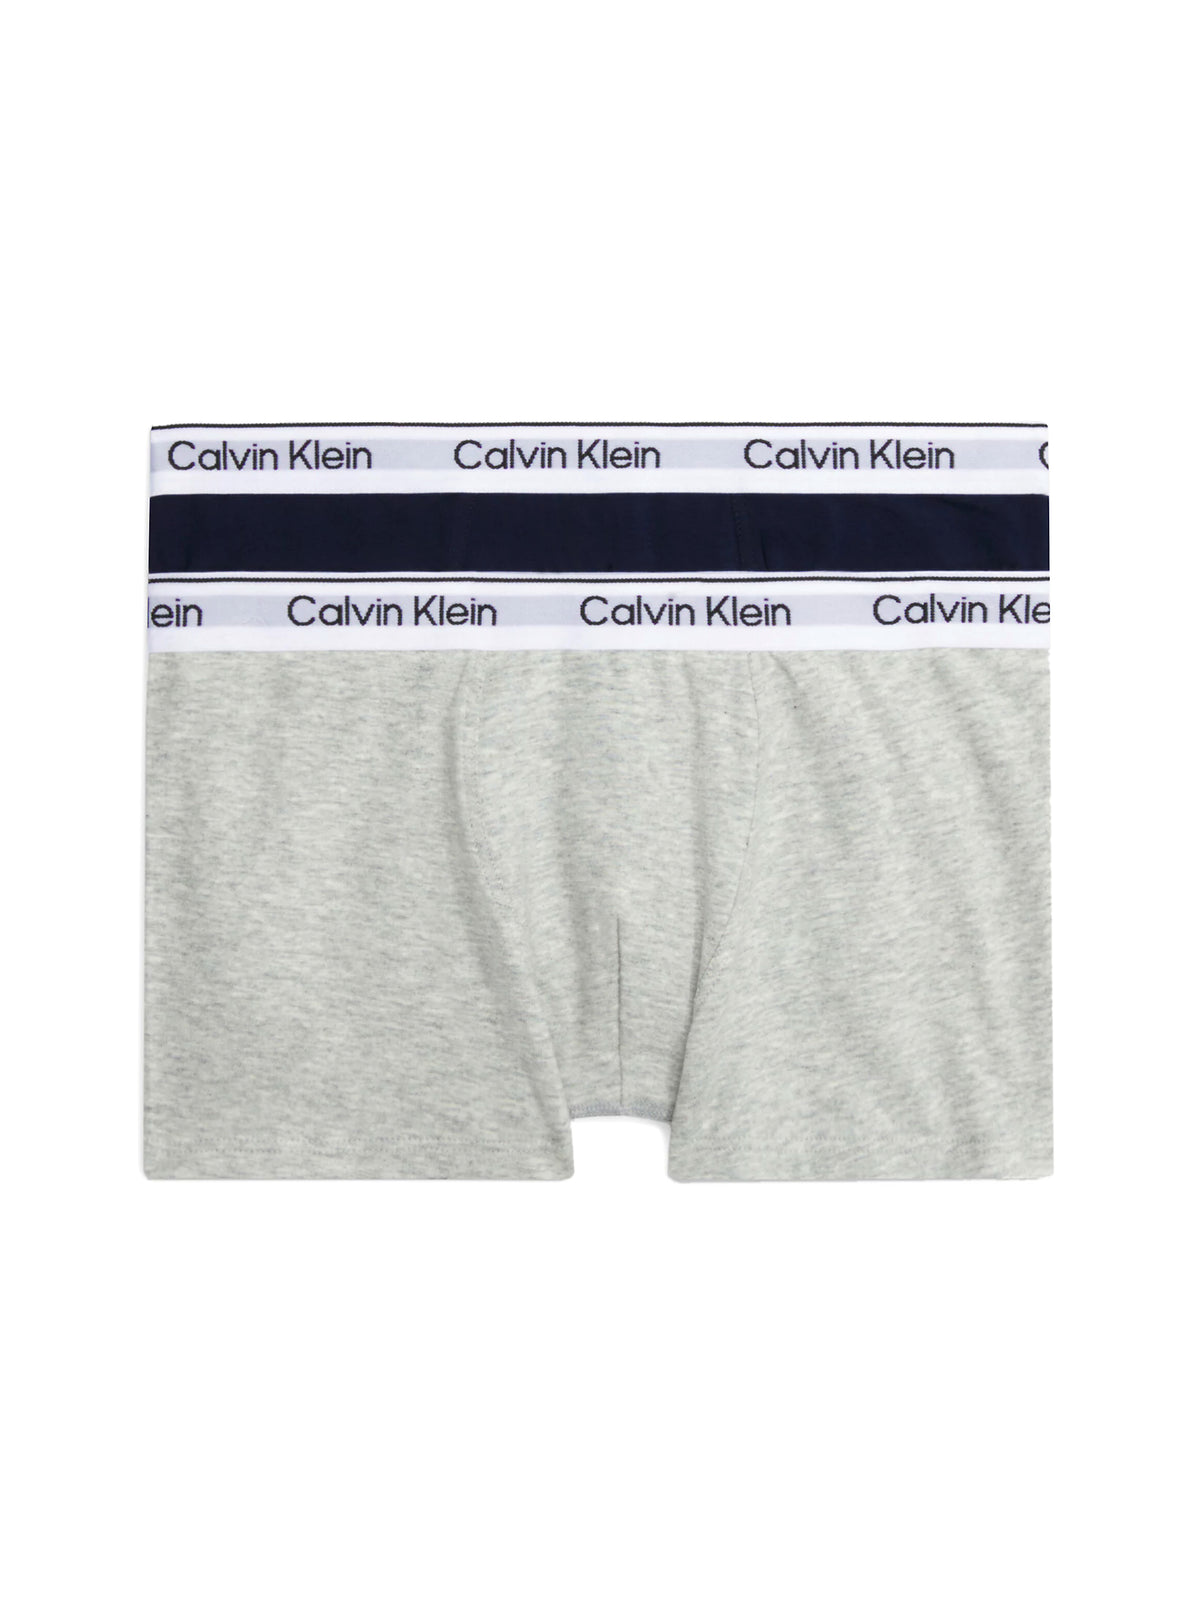 Calvin Klein Boys 'Modern Cotton' Boxer Trunks - 2-Pack, 01, B70B700449, Greyheather/Navyiris